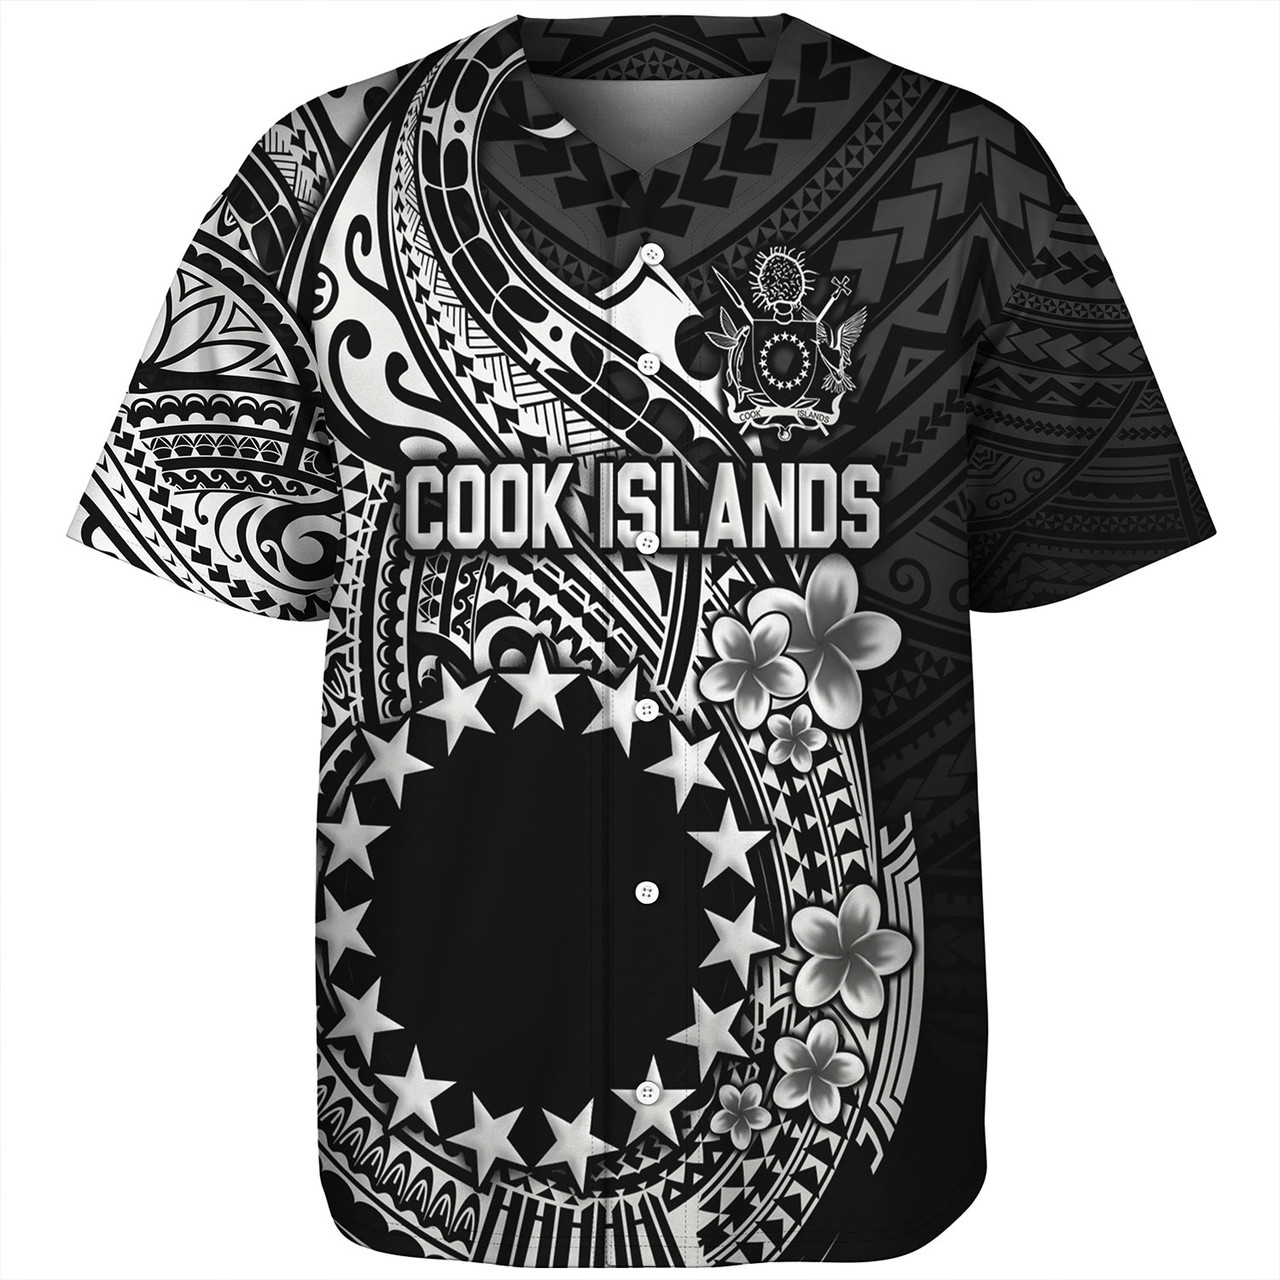 Cook Islands Baseball Shirt Plumeria Flowers Tribal Motif Design